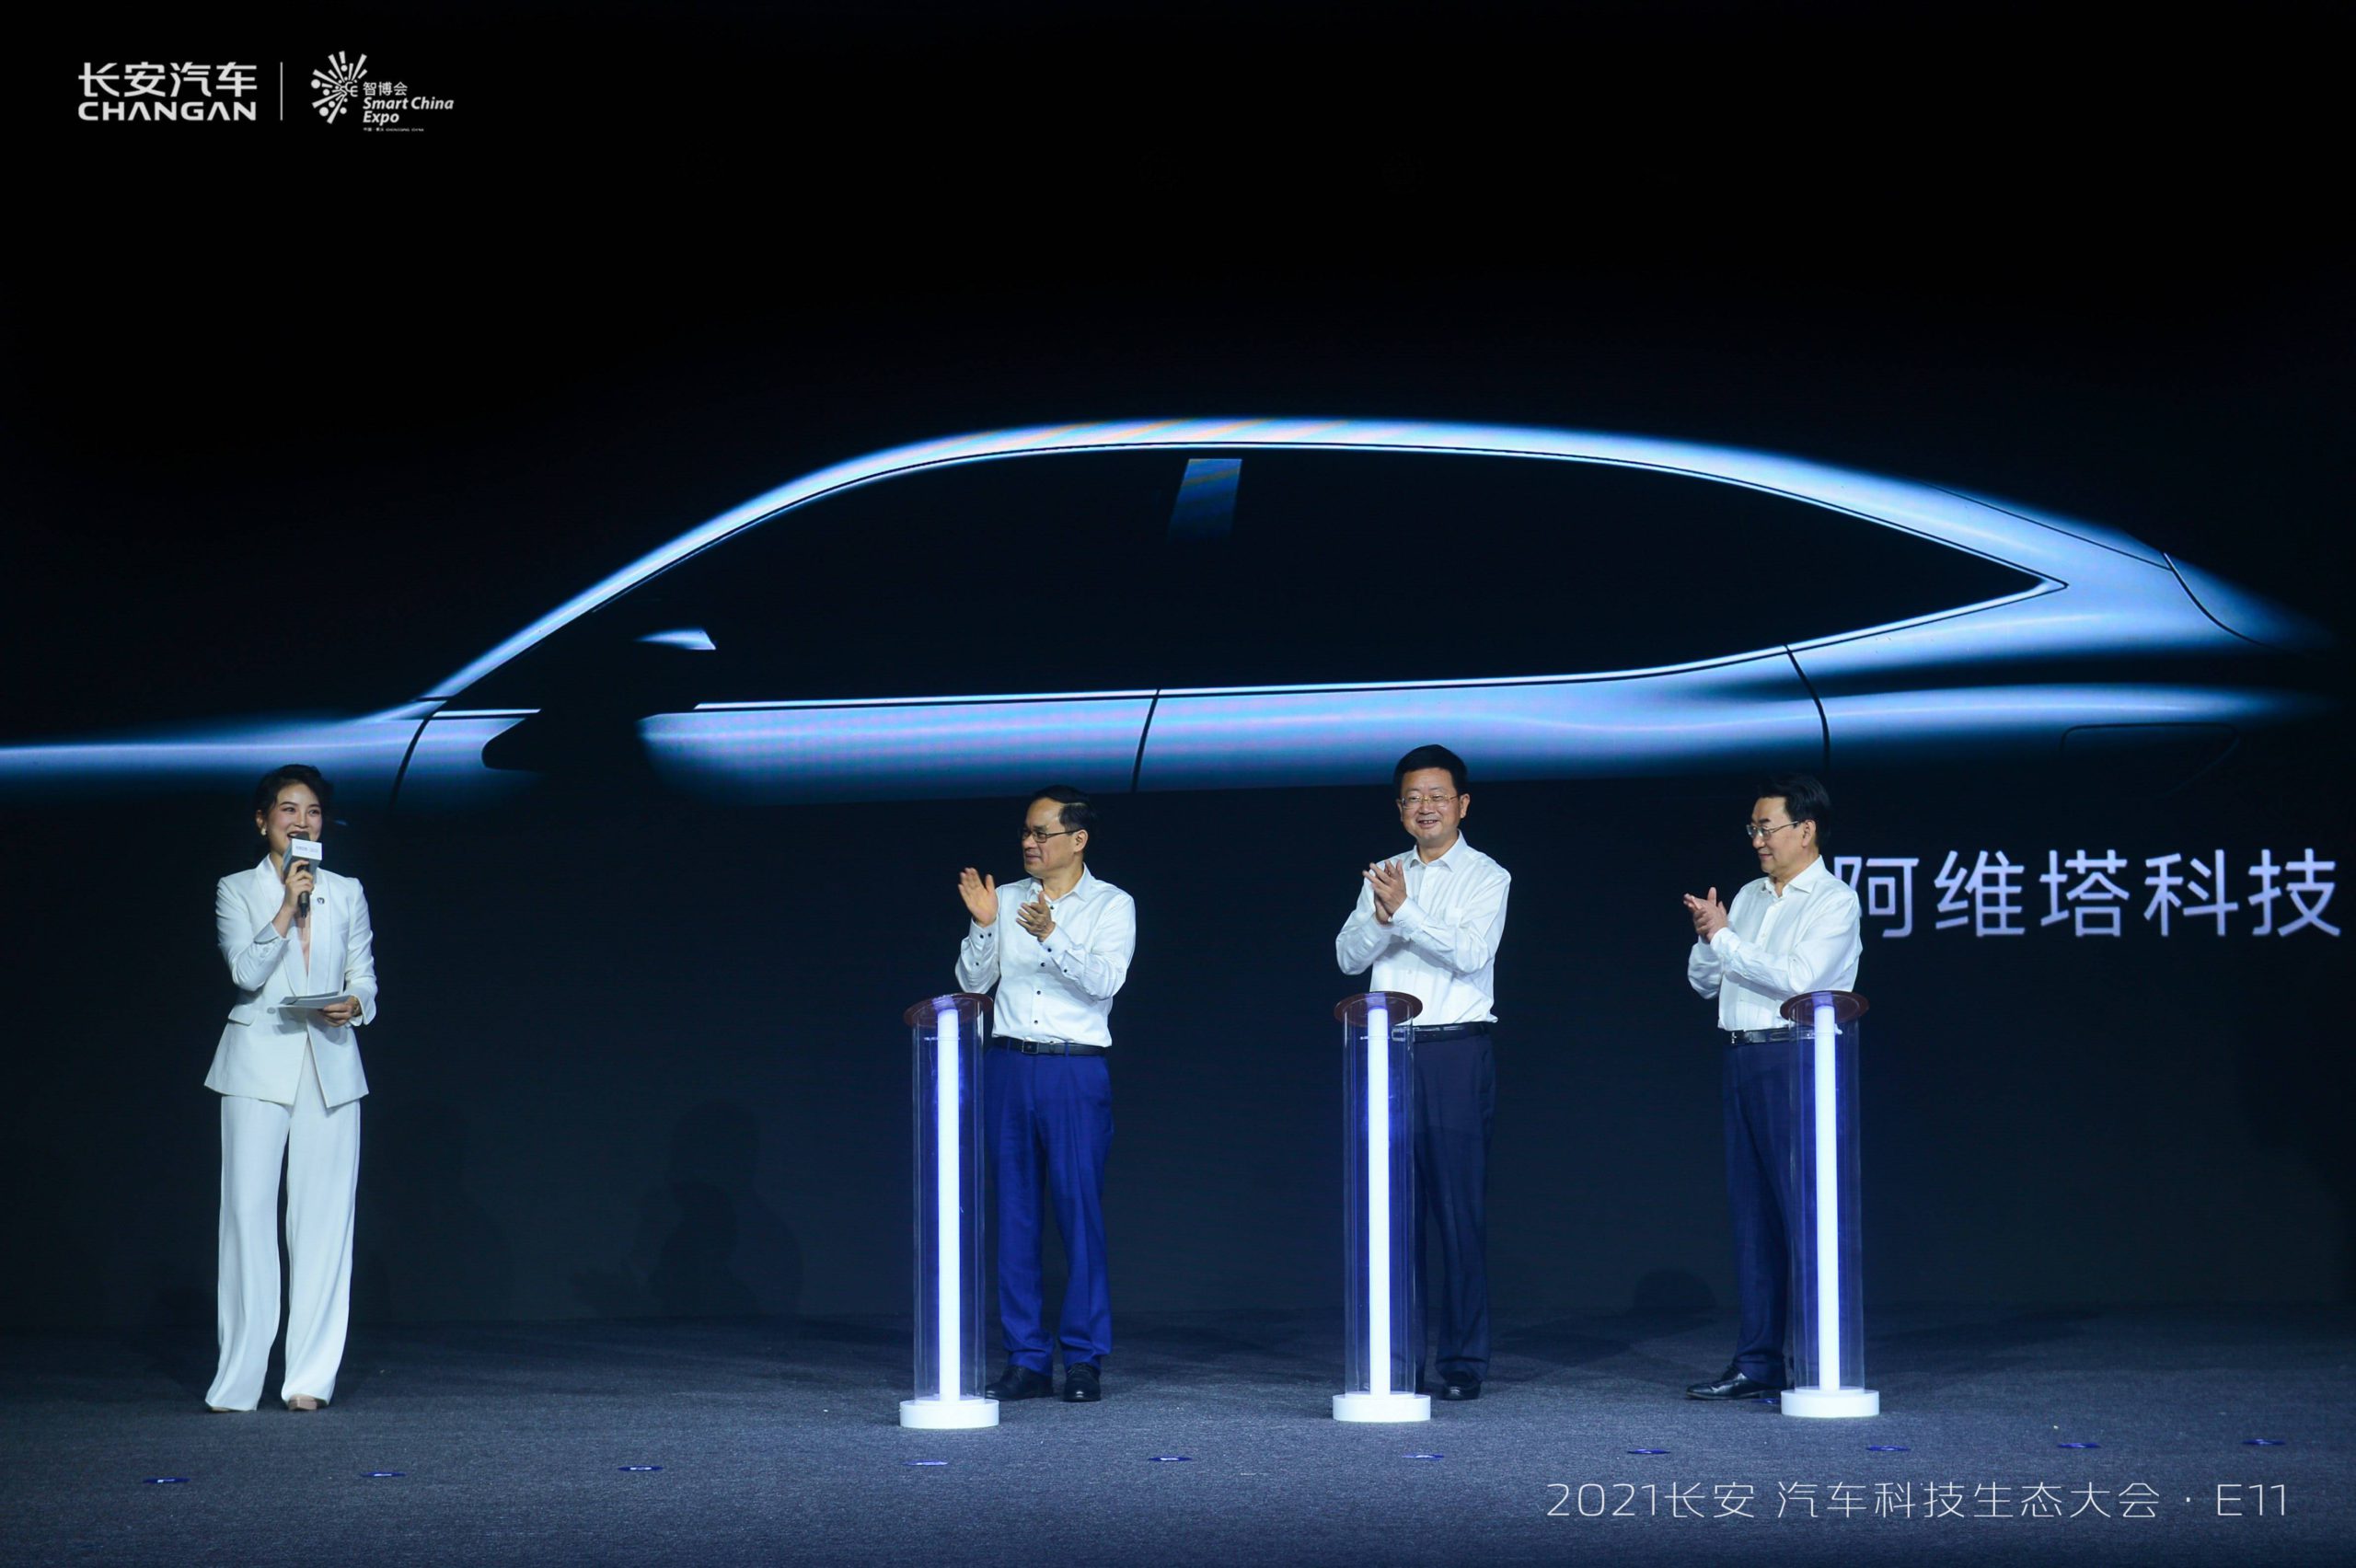 Shentong Technology ของ Changan Automobile เปิดตัวรถยนต์ใหม่ E11 คันแรก